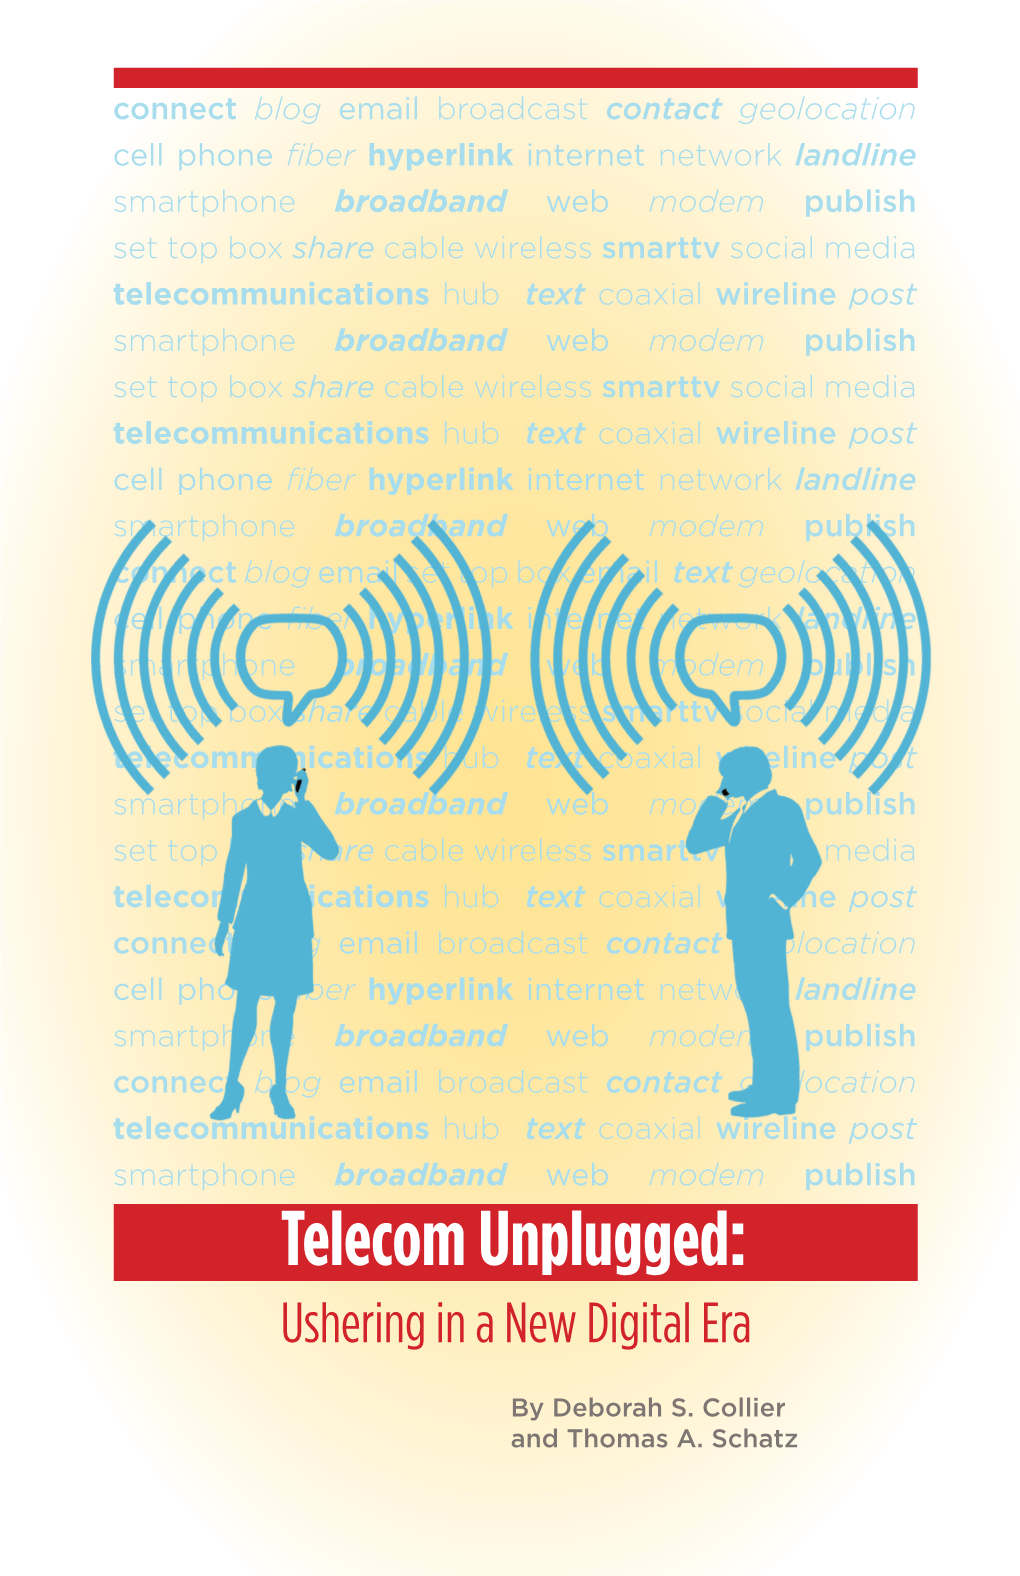 Telecom Unplugged: Ushering in a New Digital Era